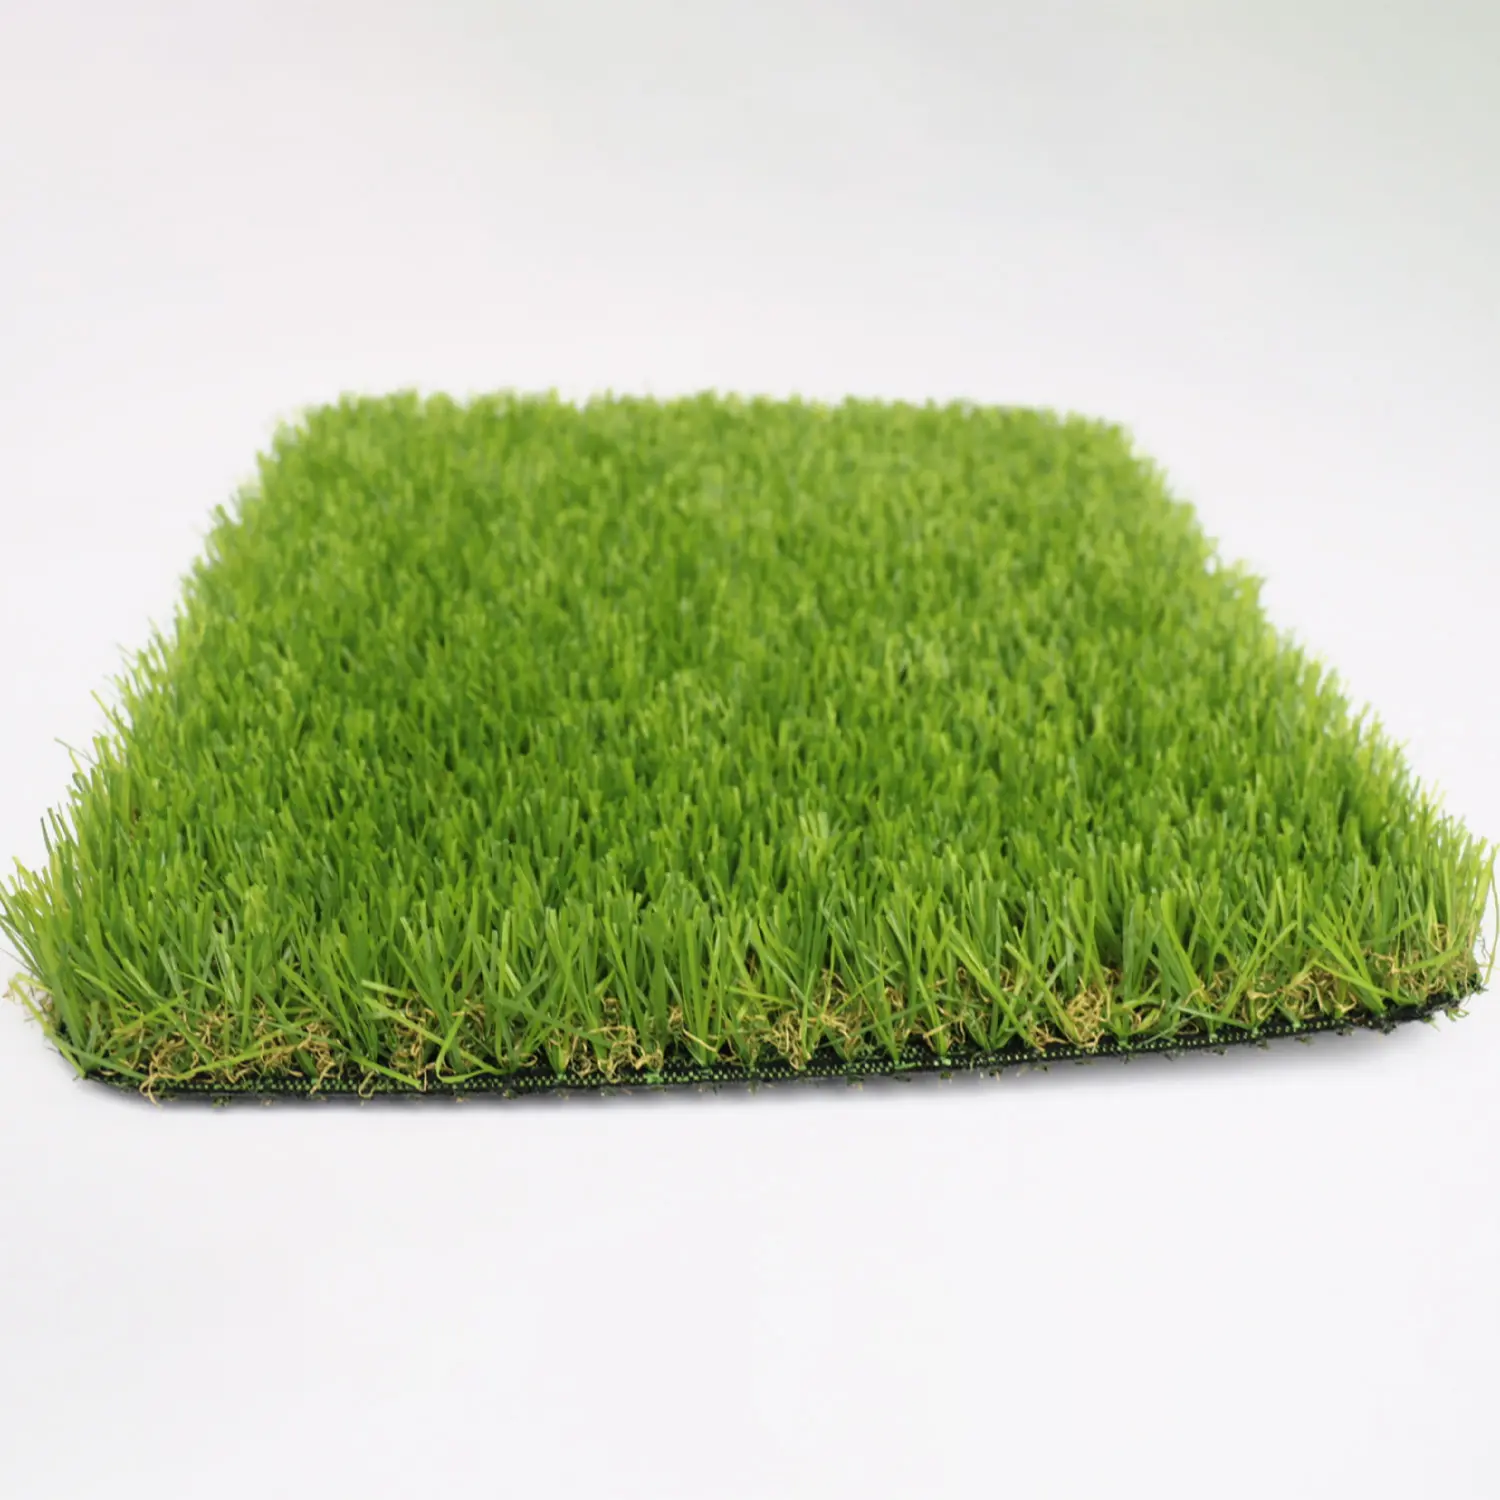 Outdoor football stadium turf green artificial grass landscape carpet for sell